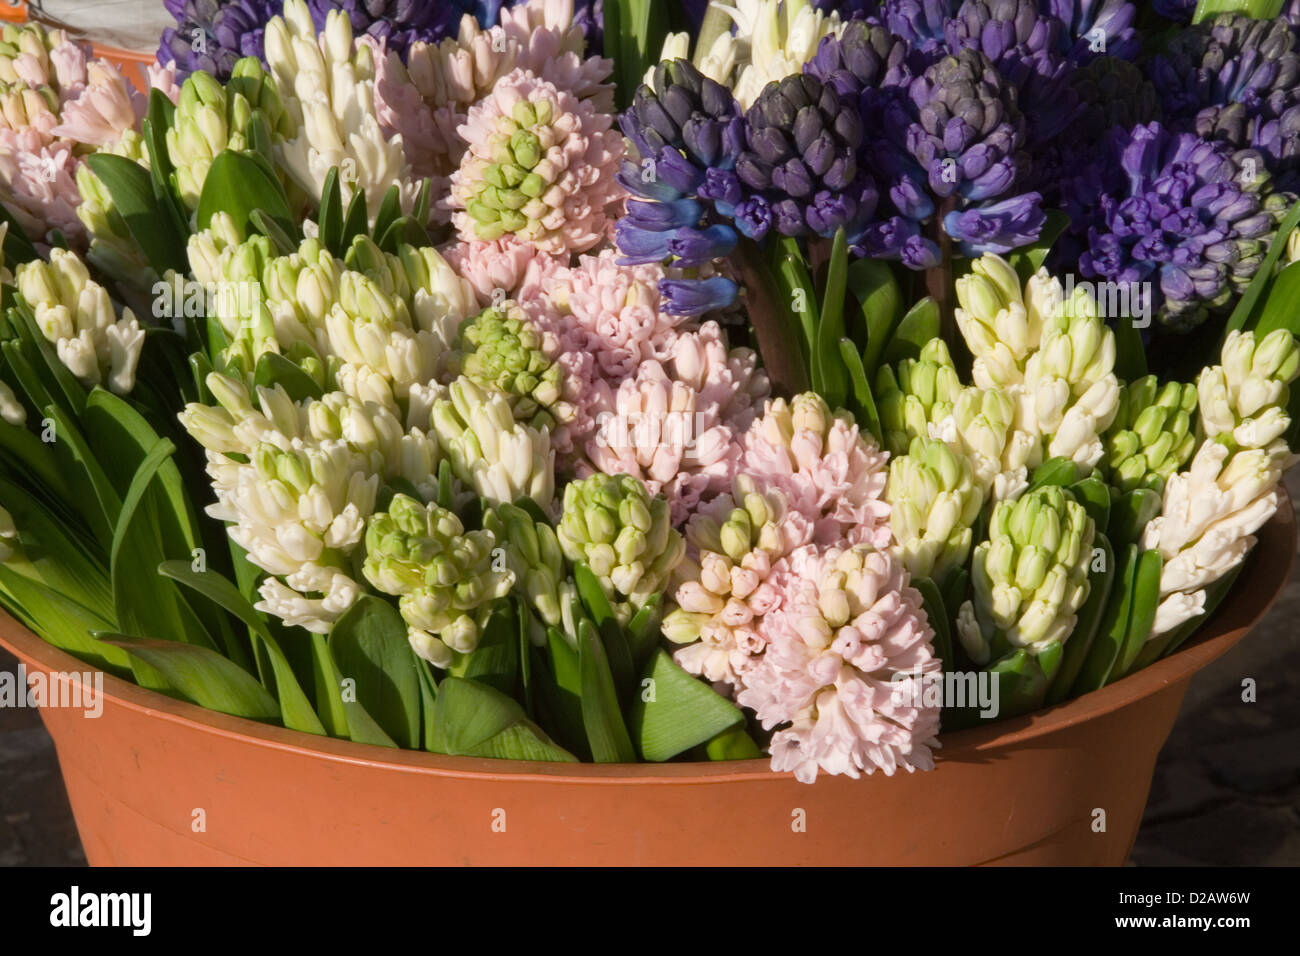 A bucket full of Hyacinths Stock Photo